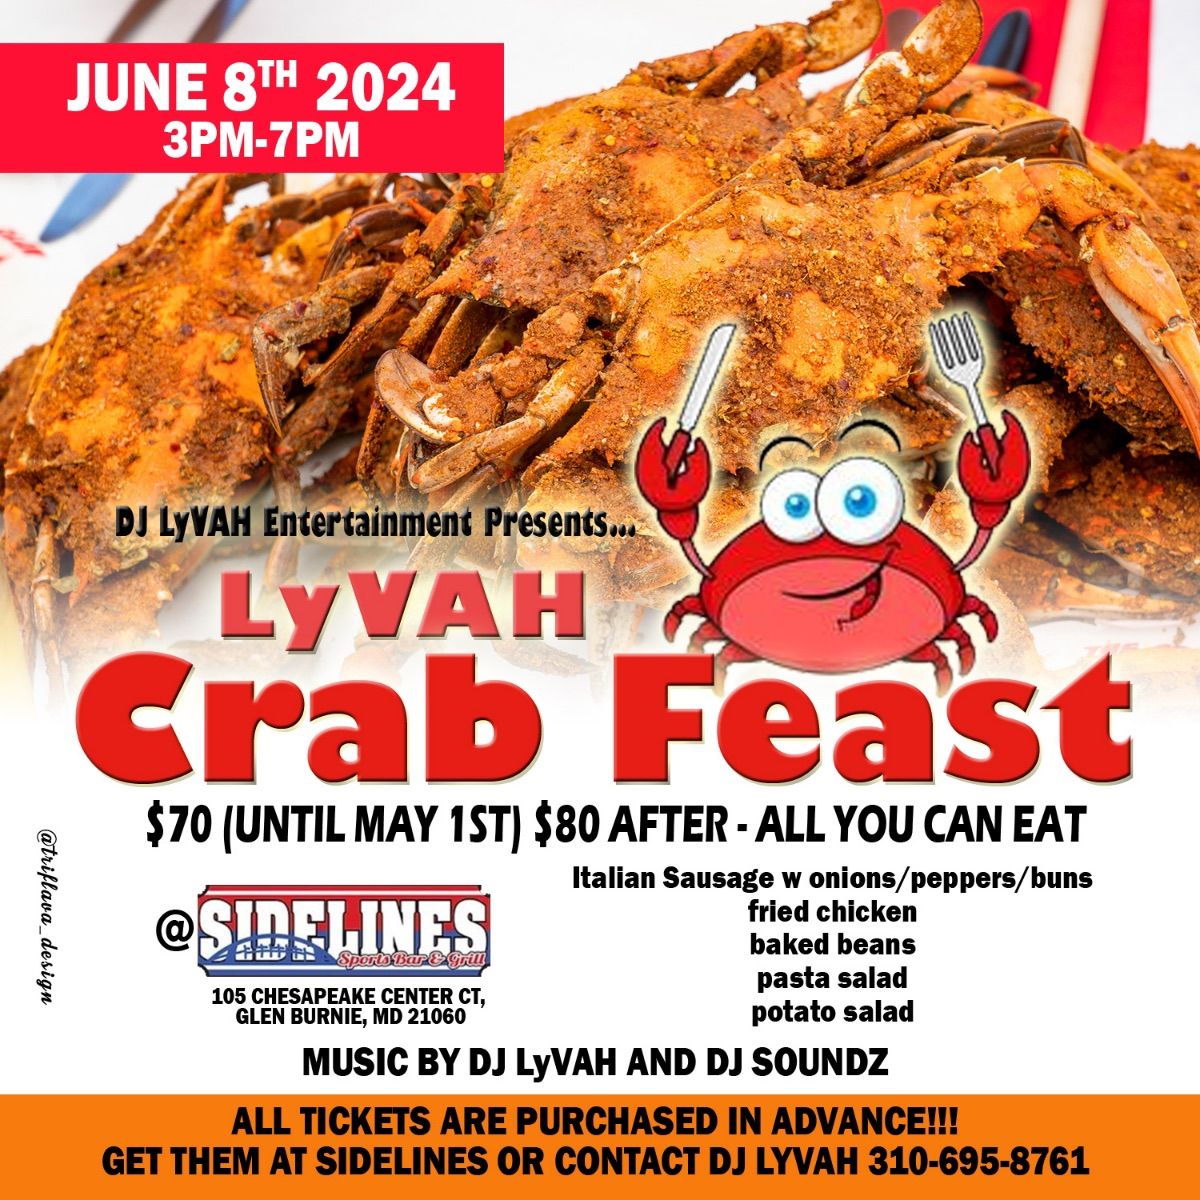 LyVAH Crab Feast